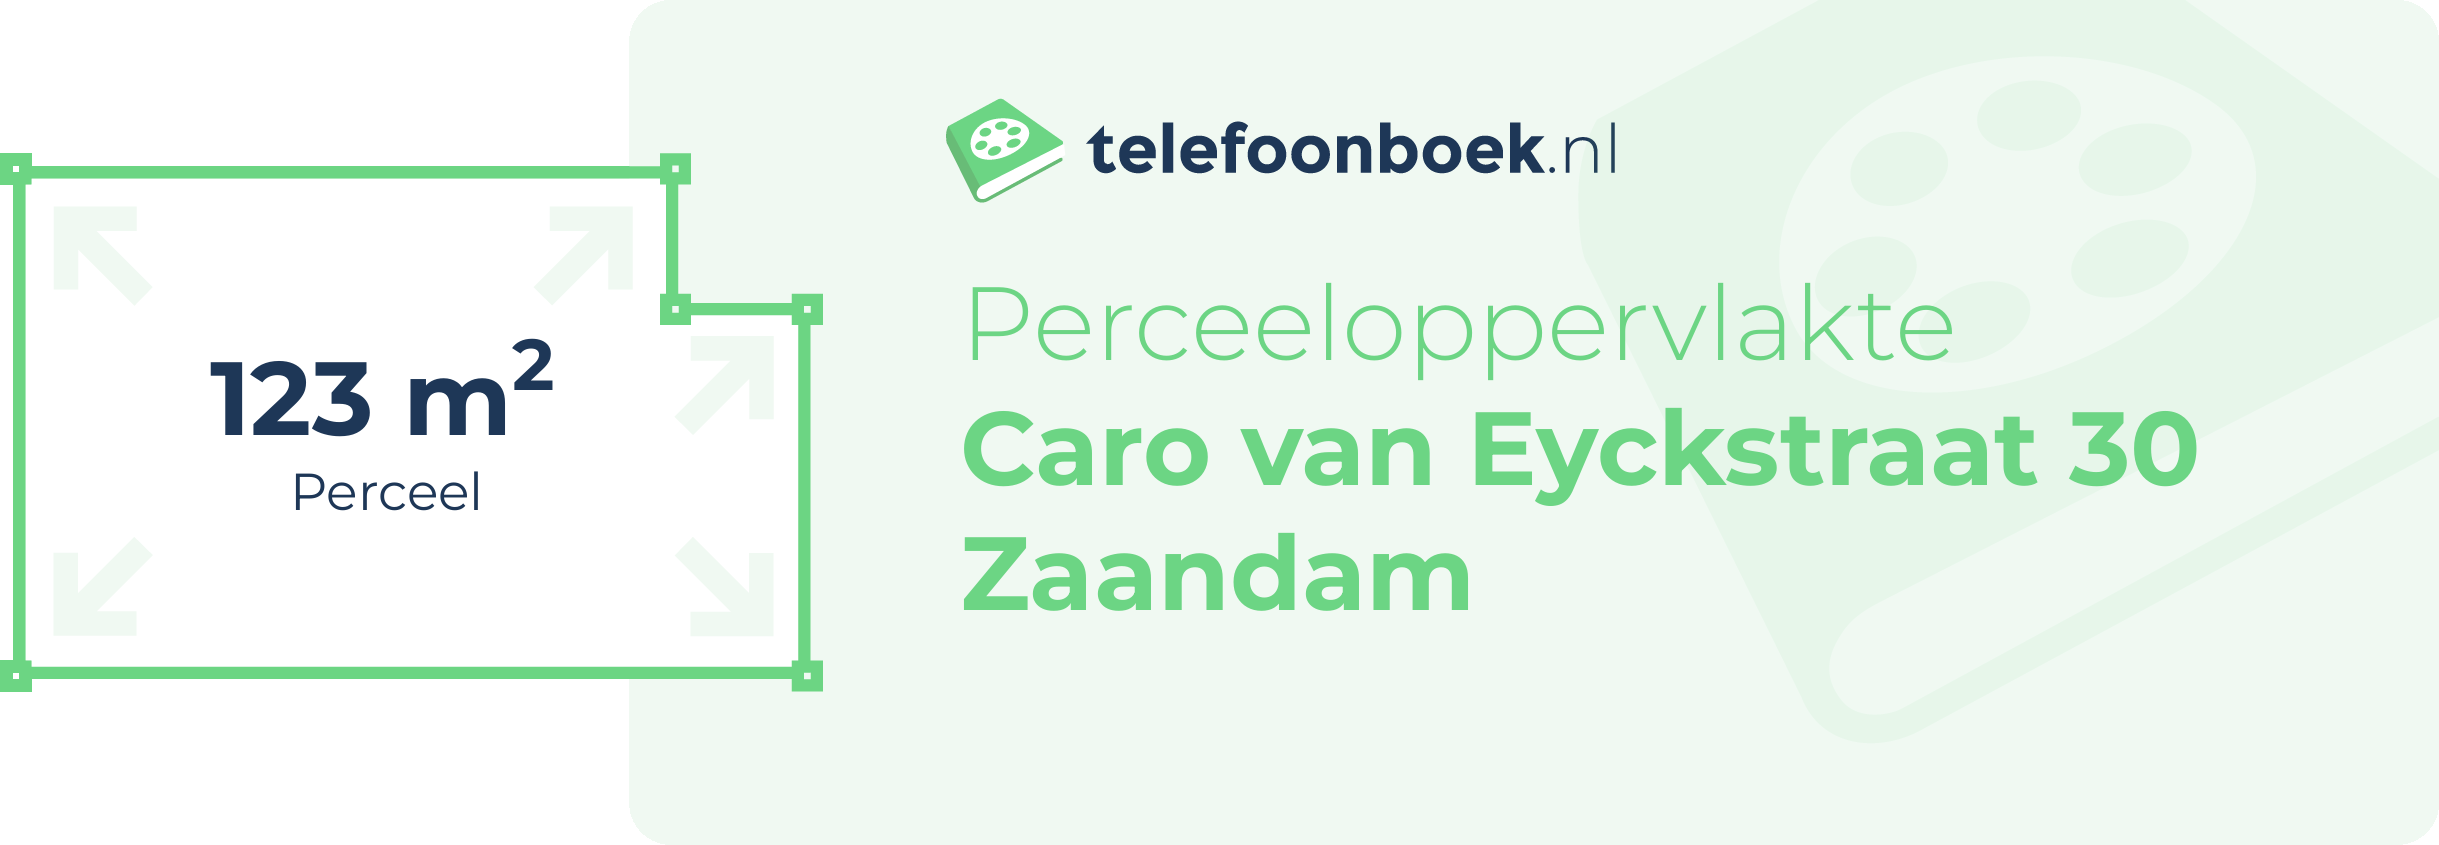 Perceeloppervlakte Caro Van Eyckstraat 30 Zaandam